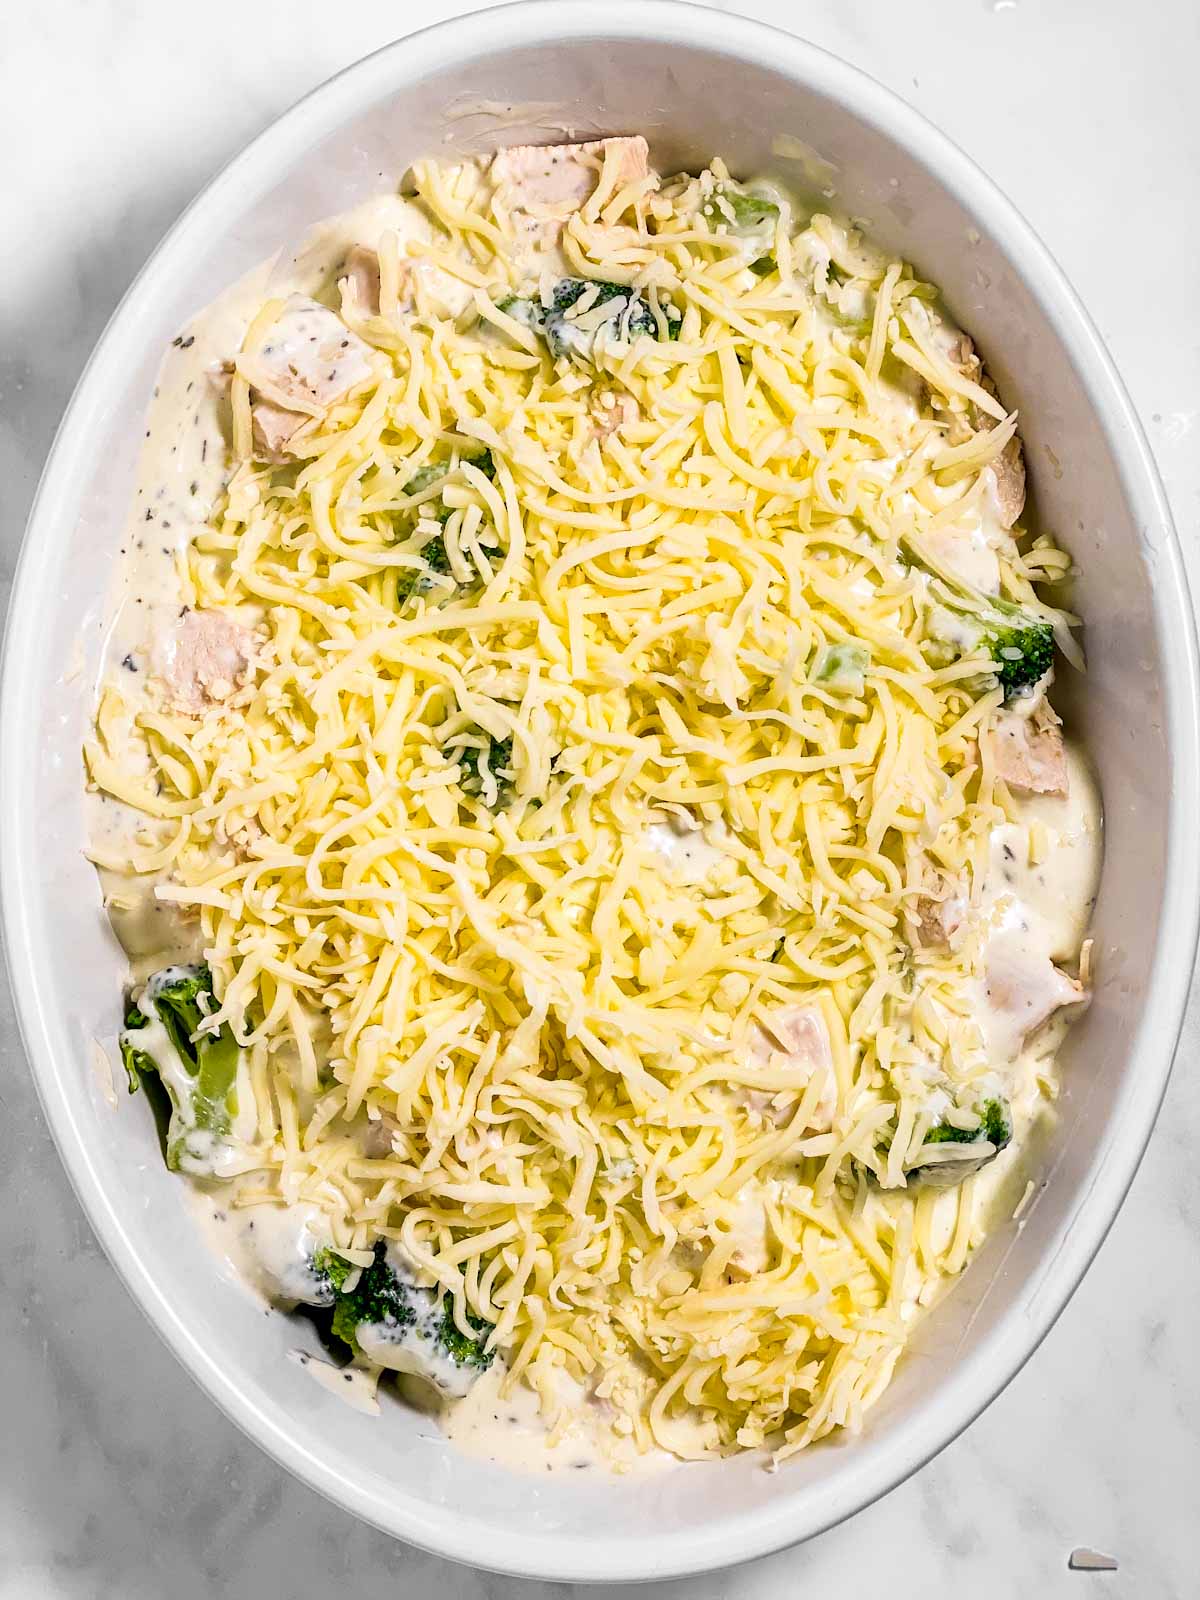 shredded mozzarella on top of chicken, broccoli and sauce in white oval casserole dish